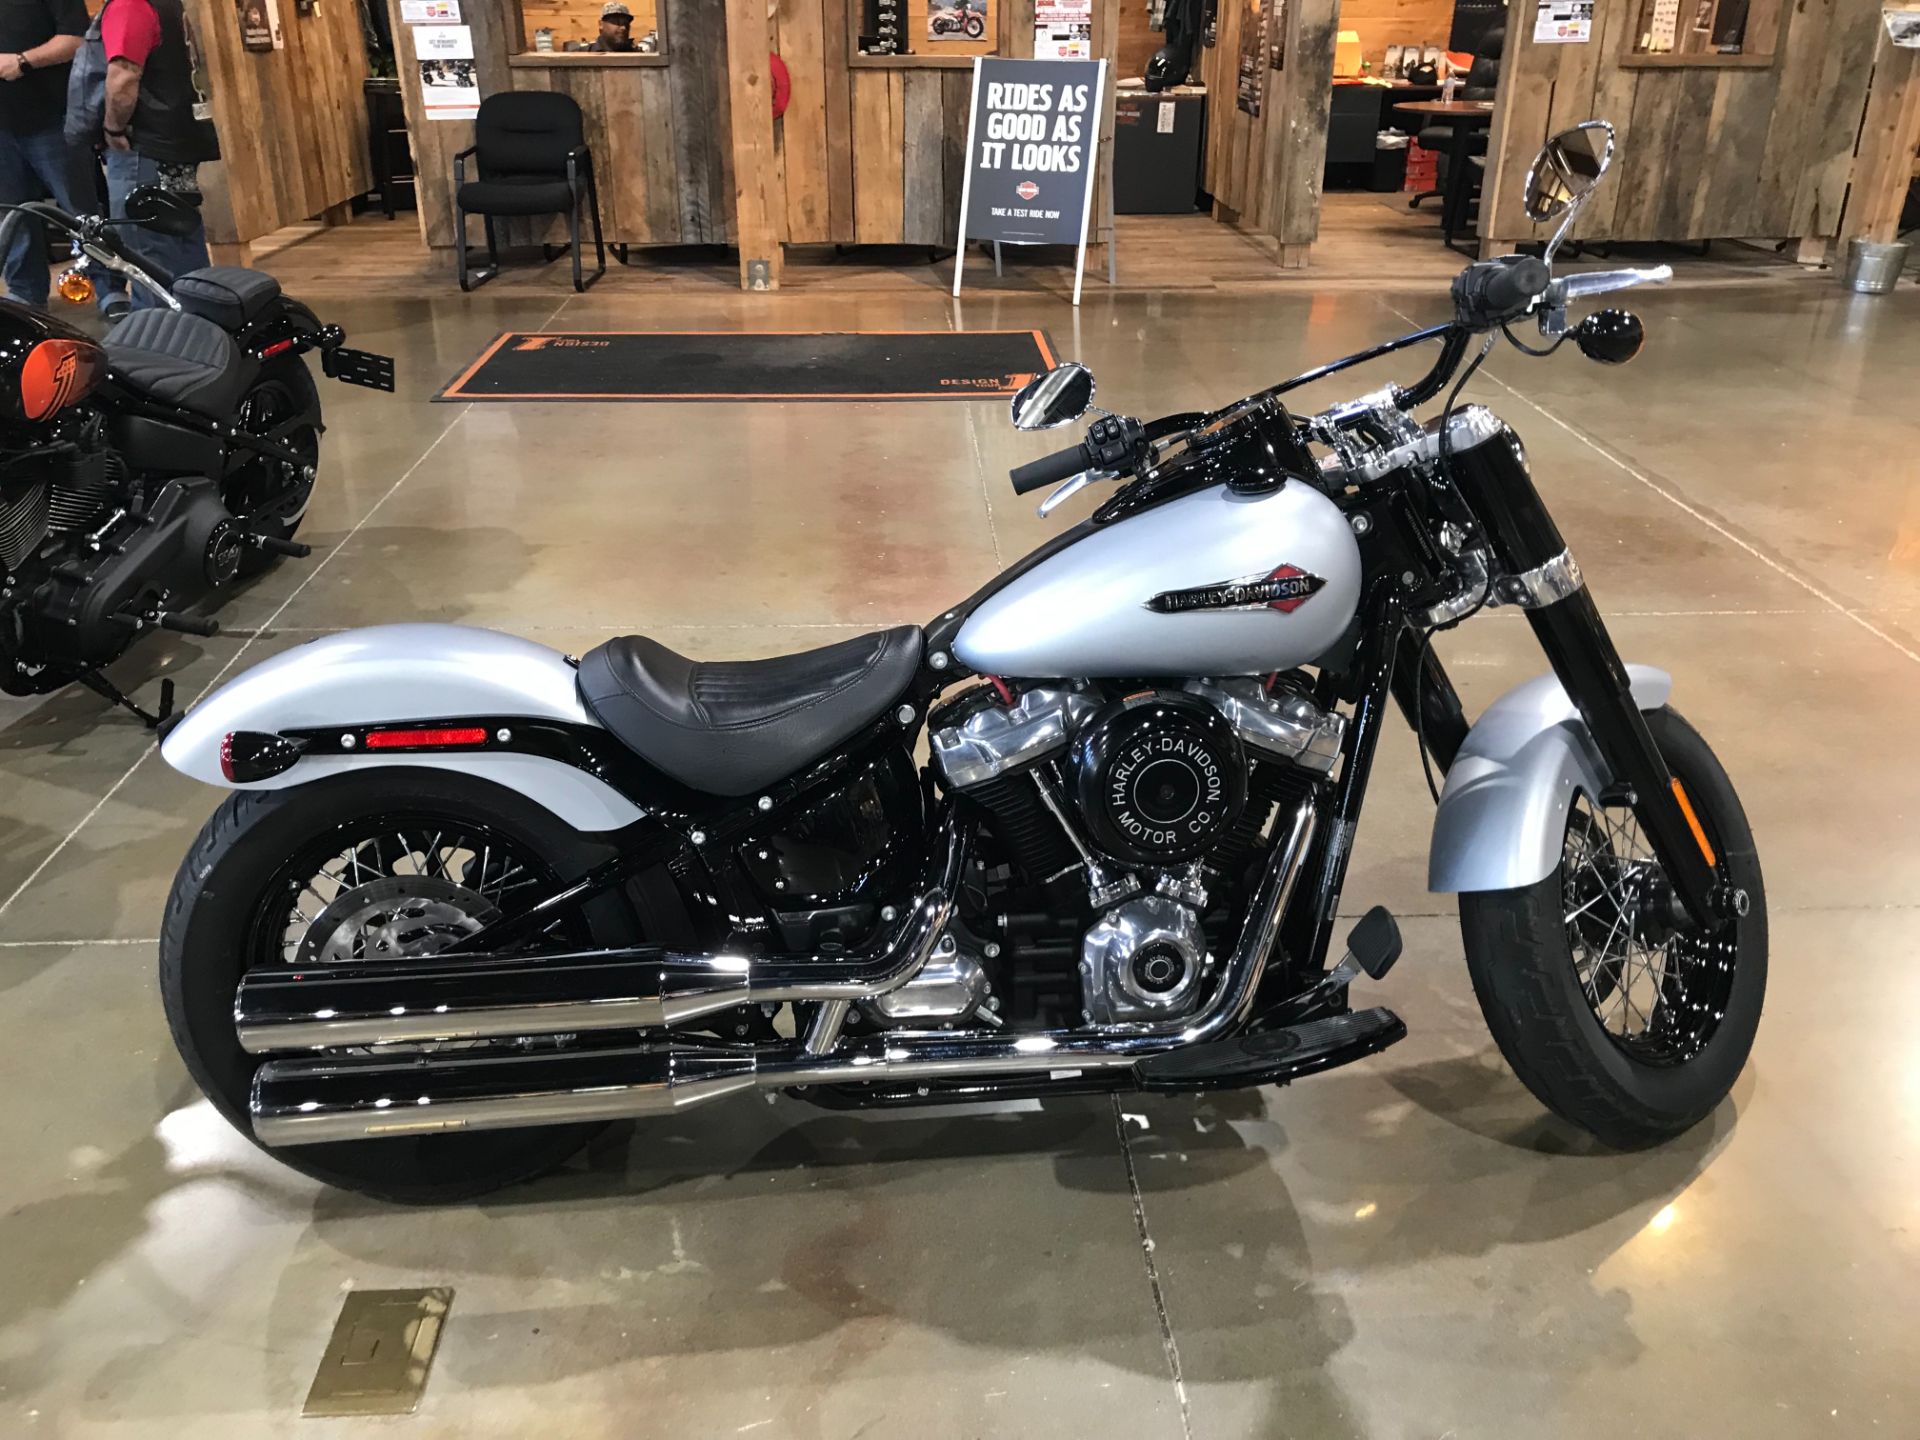 2020 Harley-Davidson Softail Slim® in Kingwood, Texas - Photo 1